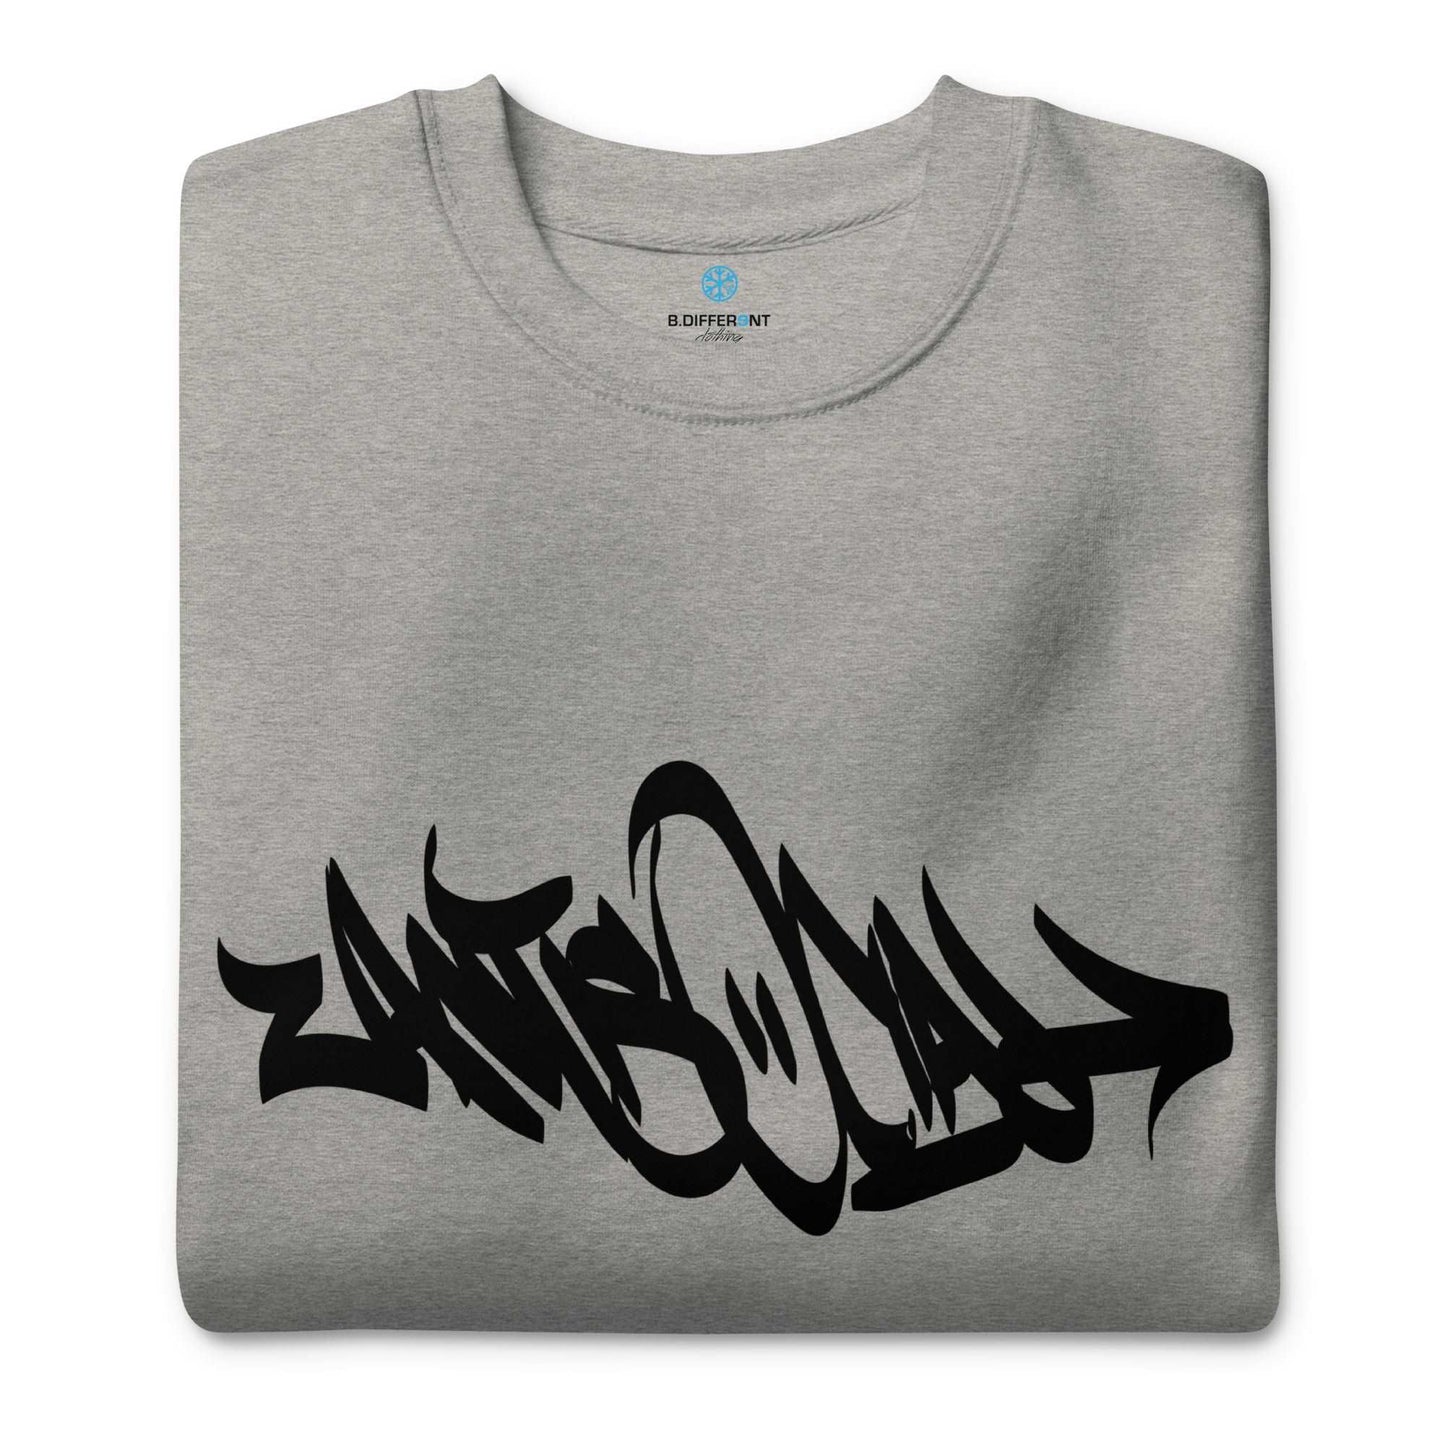 folded Antisocial Tag sweatshirt gray B.Different Clothing graffiti street art inspired streetwear brand